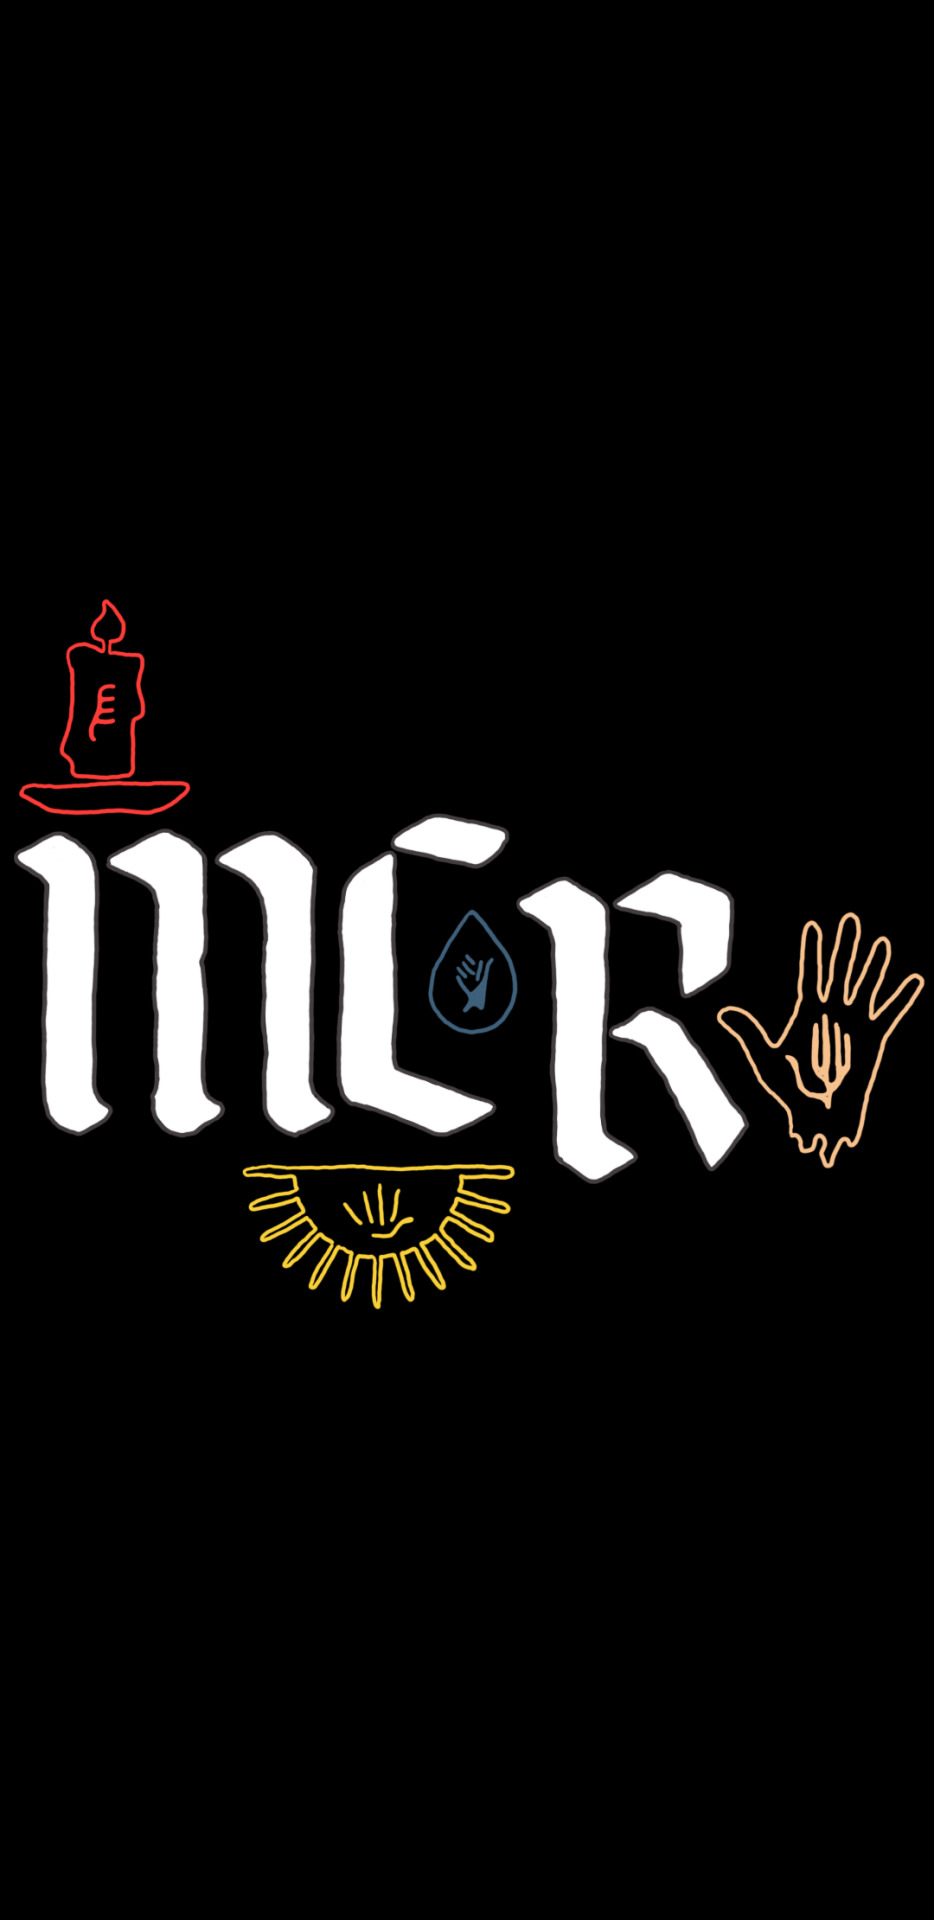 mcr logo wallpaper | Explore Tumblr Posts and Blogs | Tumpik